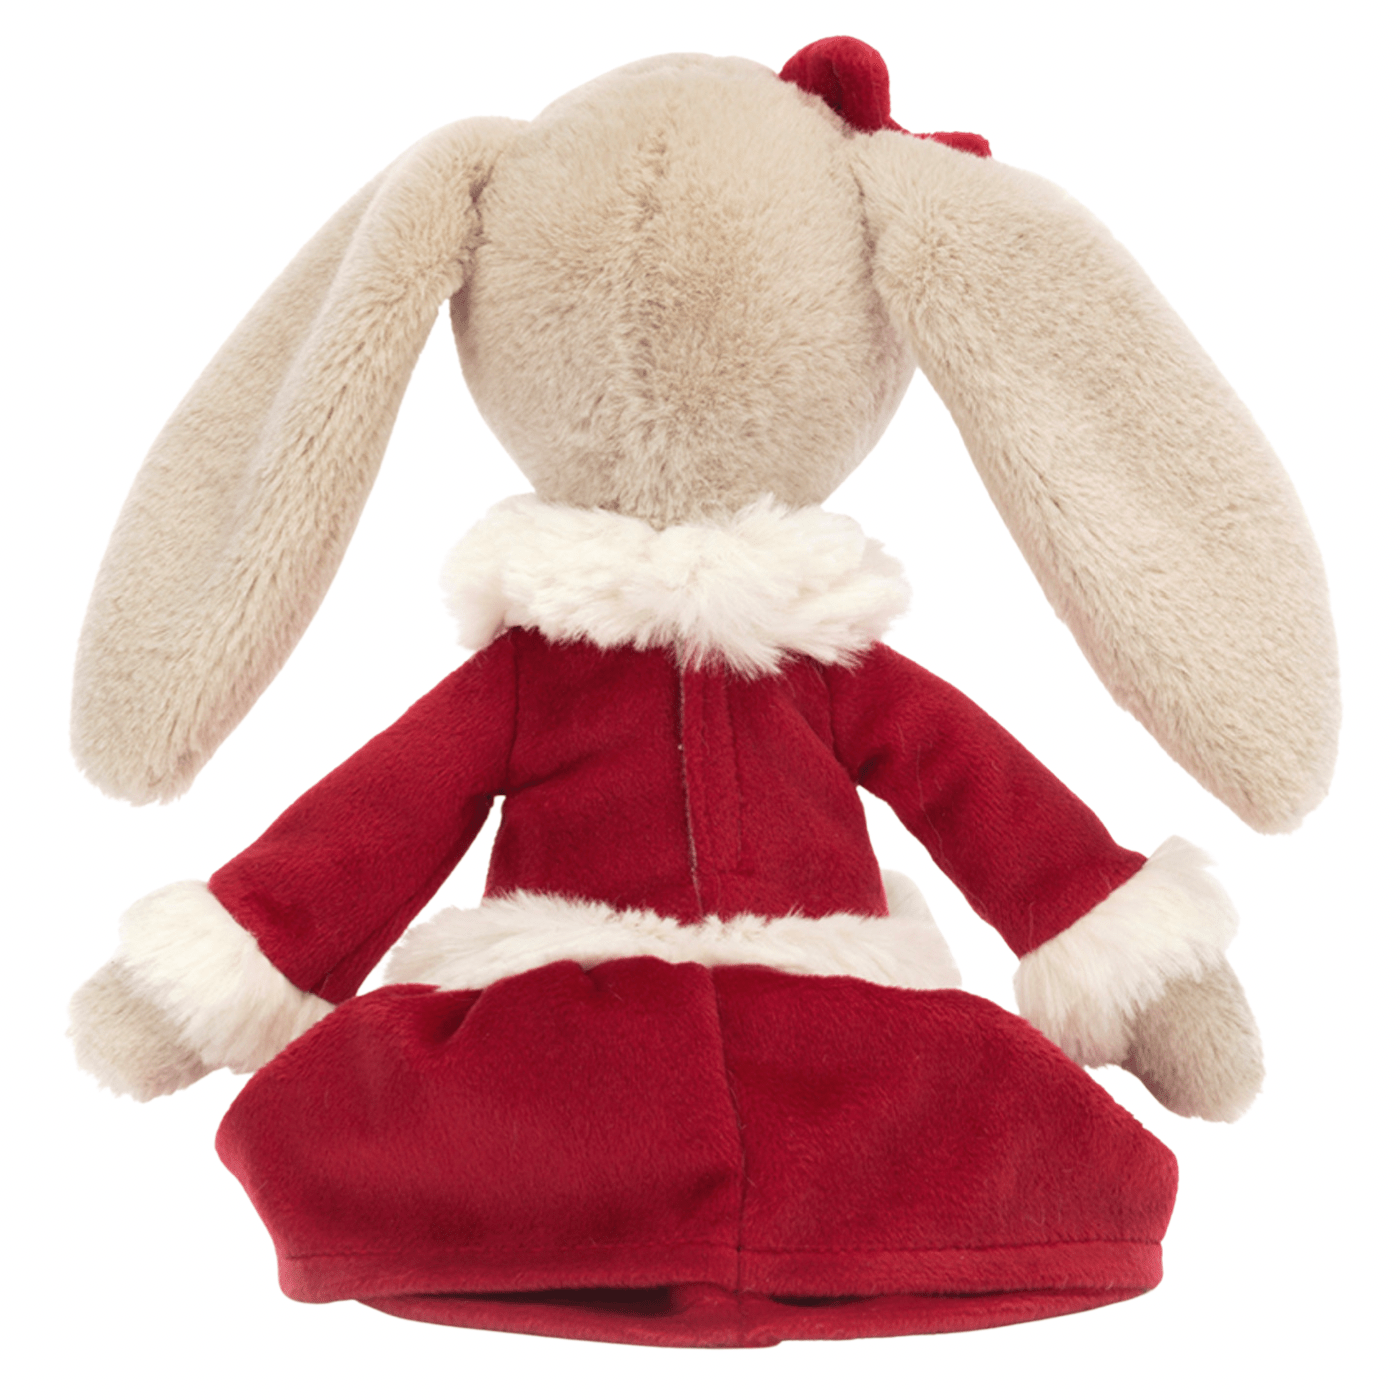 Jellycat London Lottie Bunny Festive ca. W27xH10cm🎄🎁 - Bitangel RENOVATE & FURNISH HOMES GmbH